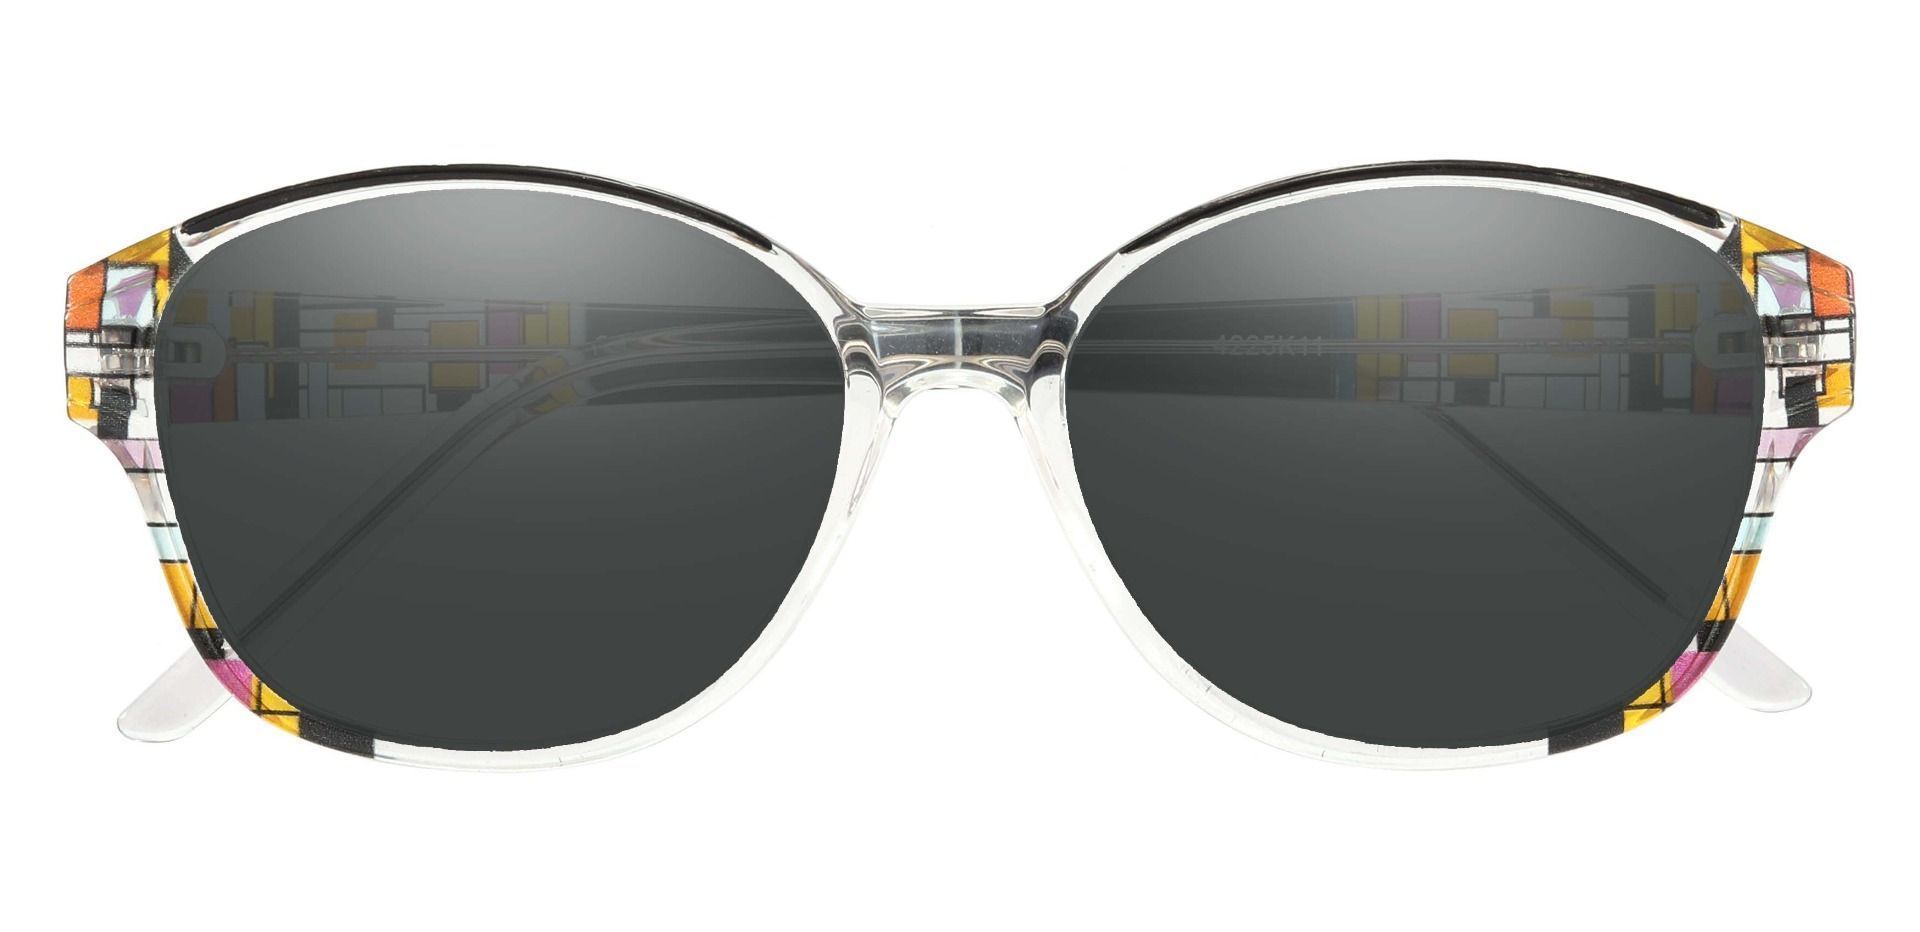 Moira Oval Non-Rx Sunglasses - Black Frame With Gray Lenses